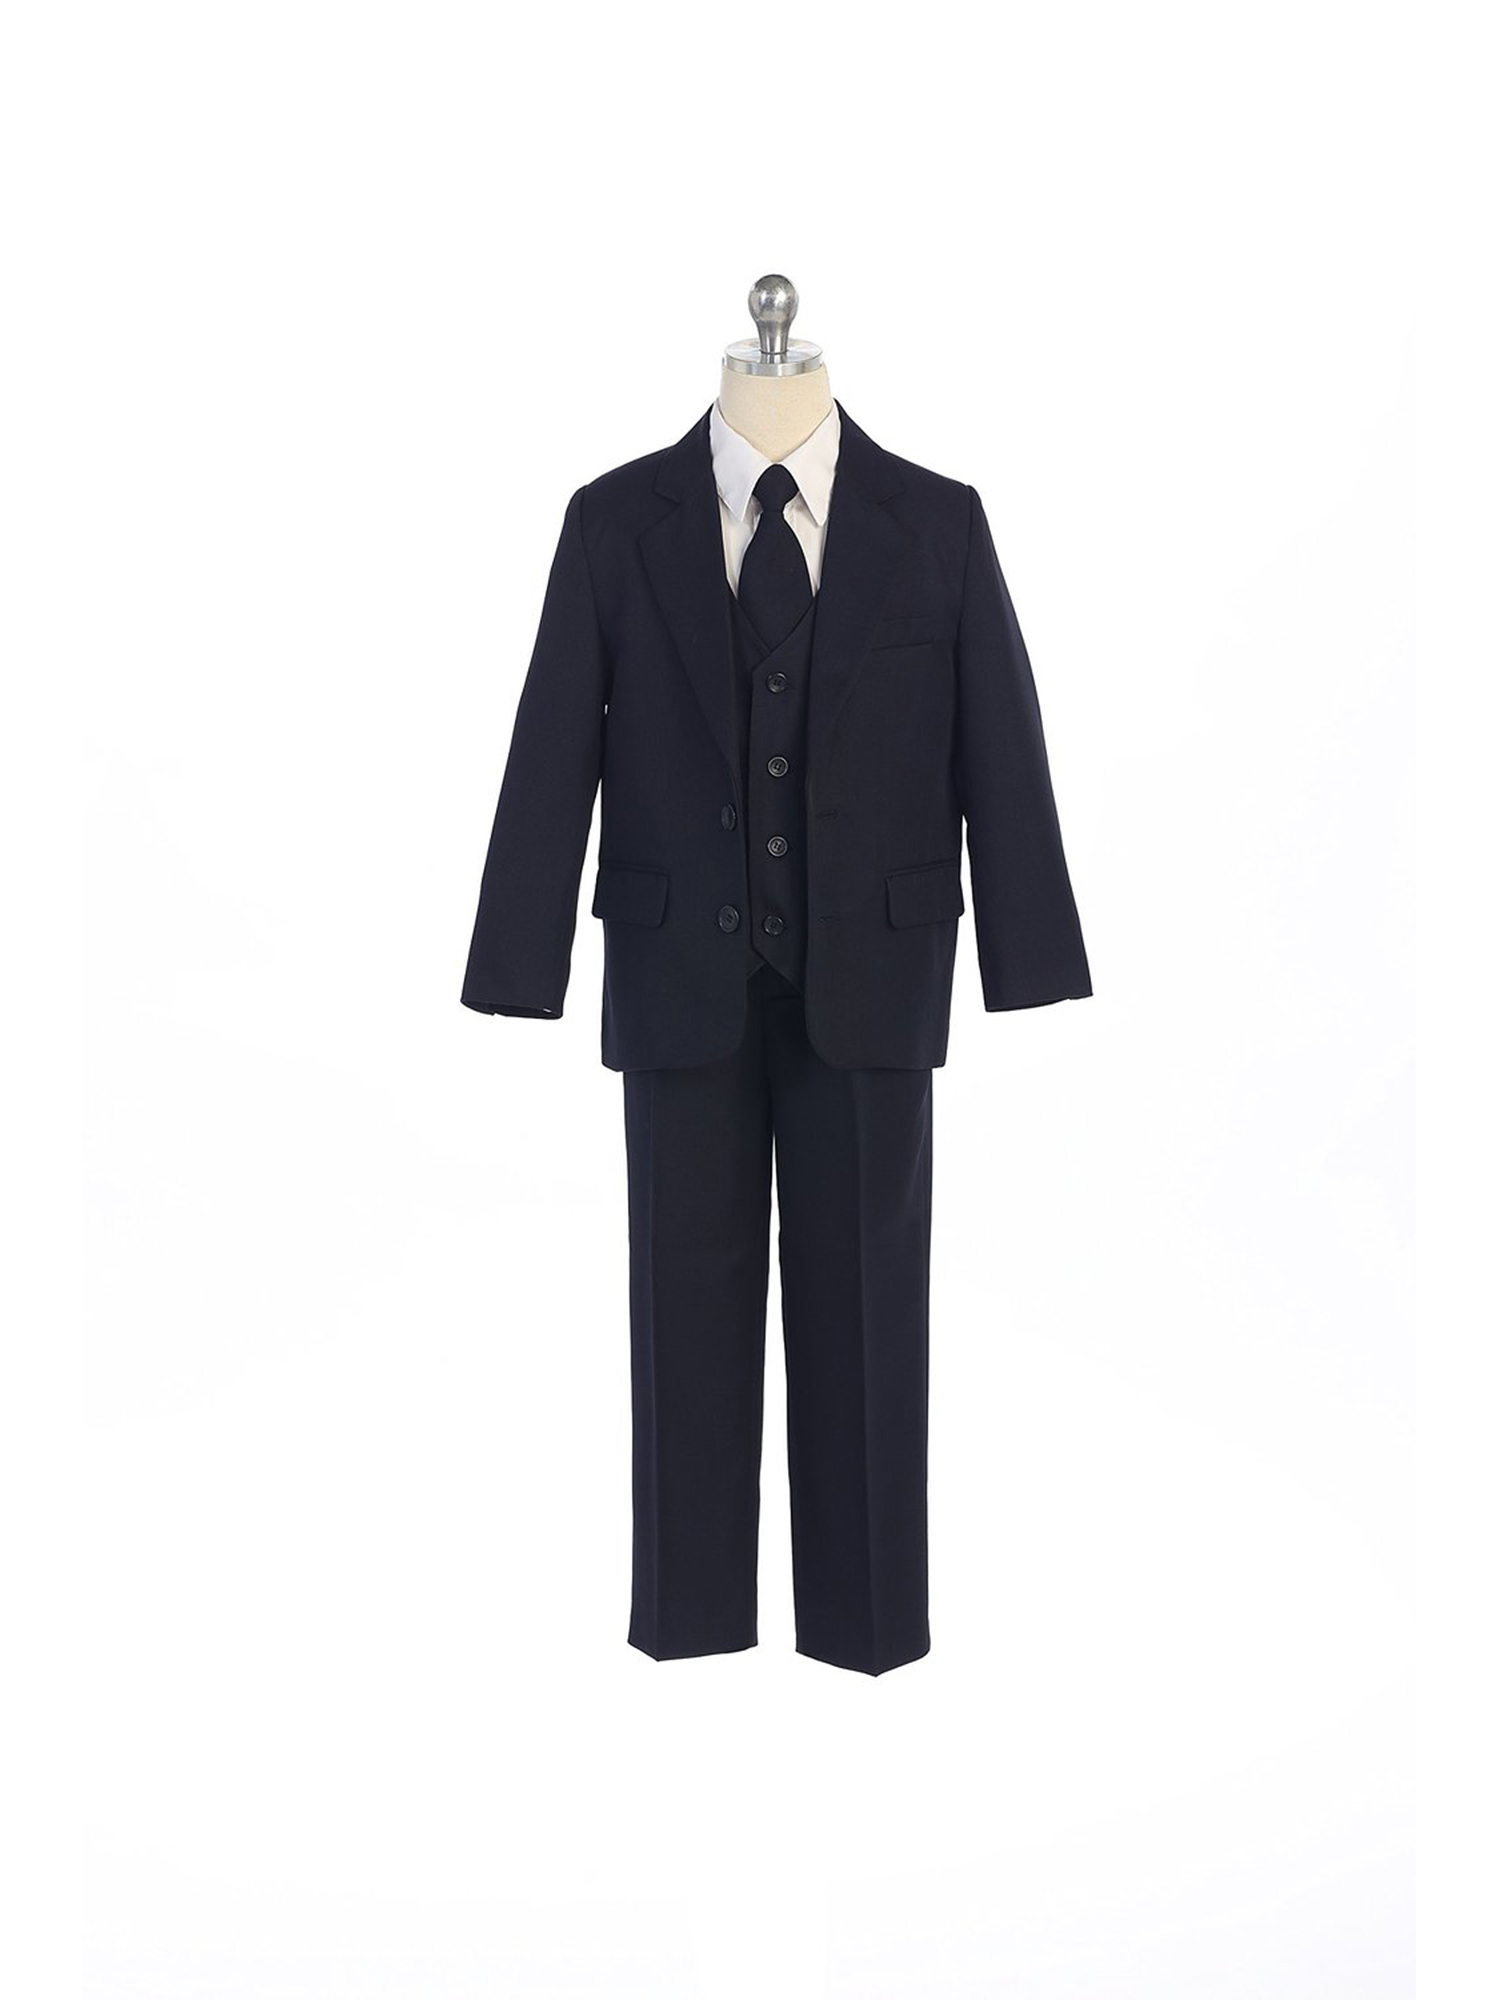 COLE Boys Suit with Shirt and Vest (5-Piece) - Navy Blue - Size 7